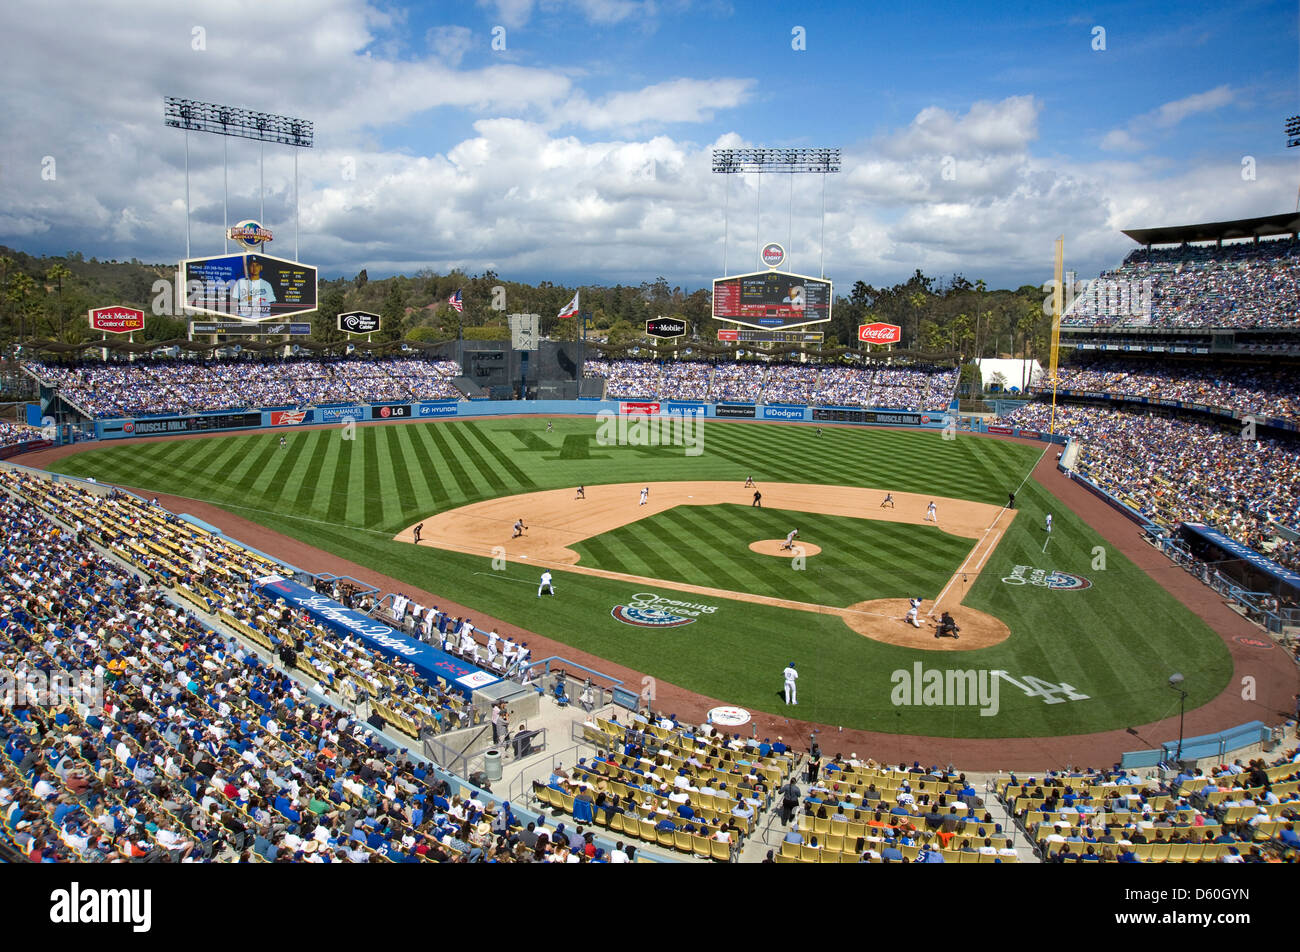 Los Angeles Dodgers baseball game at Dodger Stadium Stock Photo